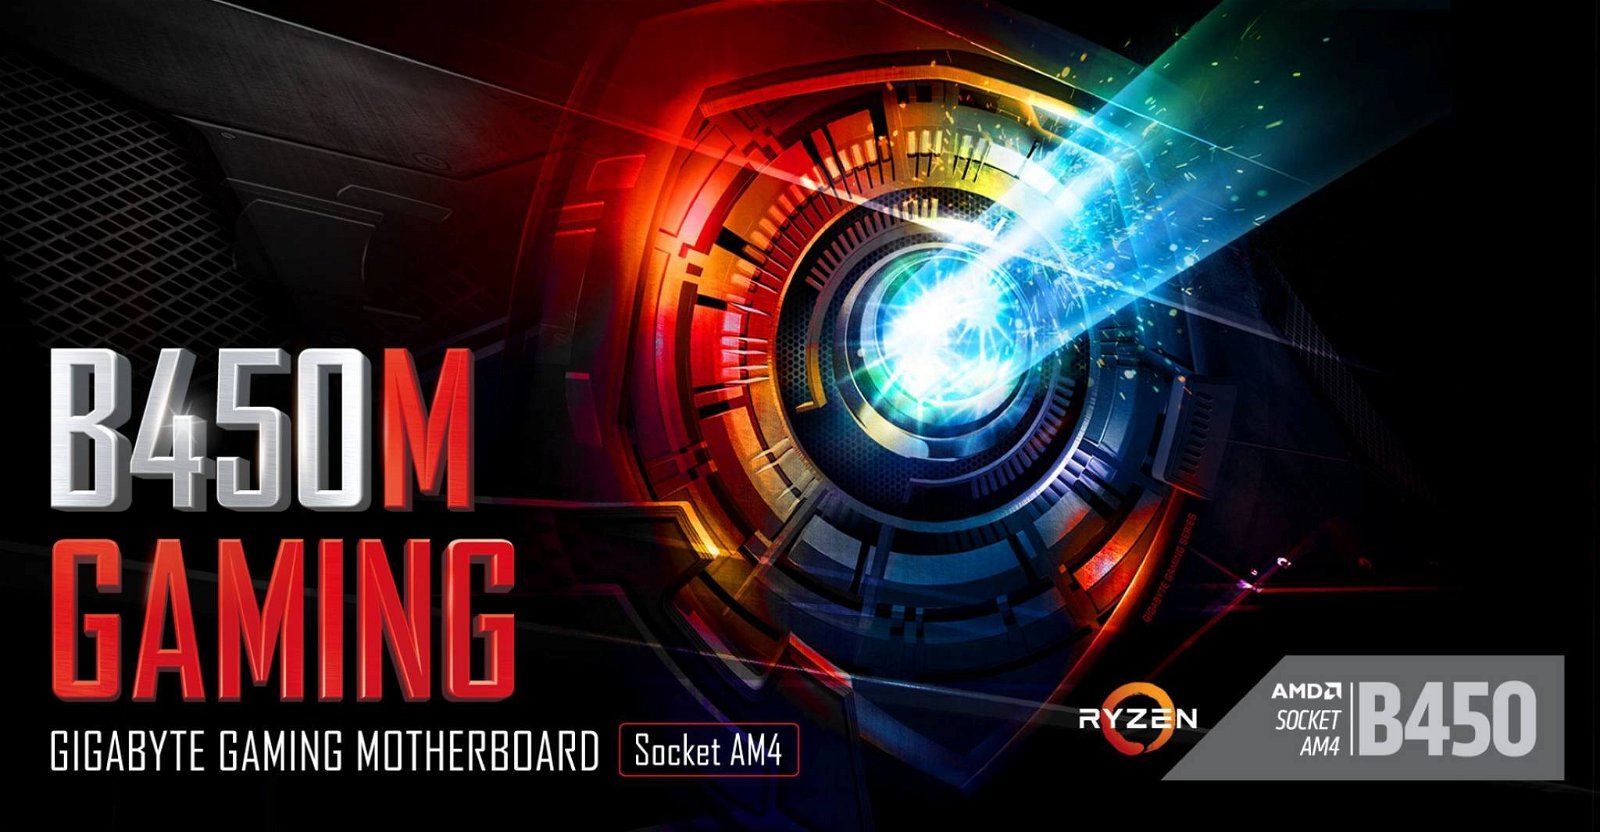 Immagine di Gigabyte B450M Gaming, scheda madre economica e compatta per CPU AMD Ryzen